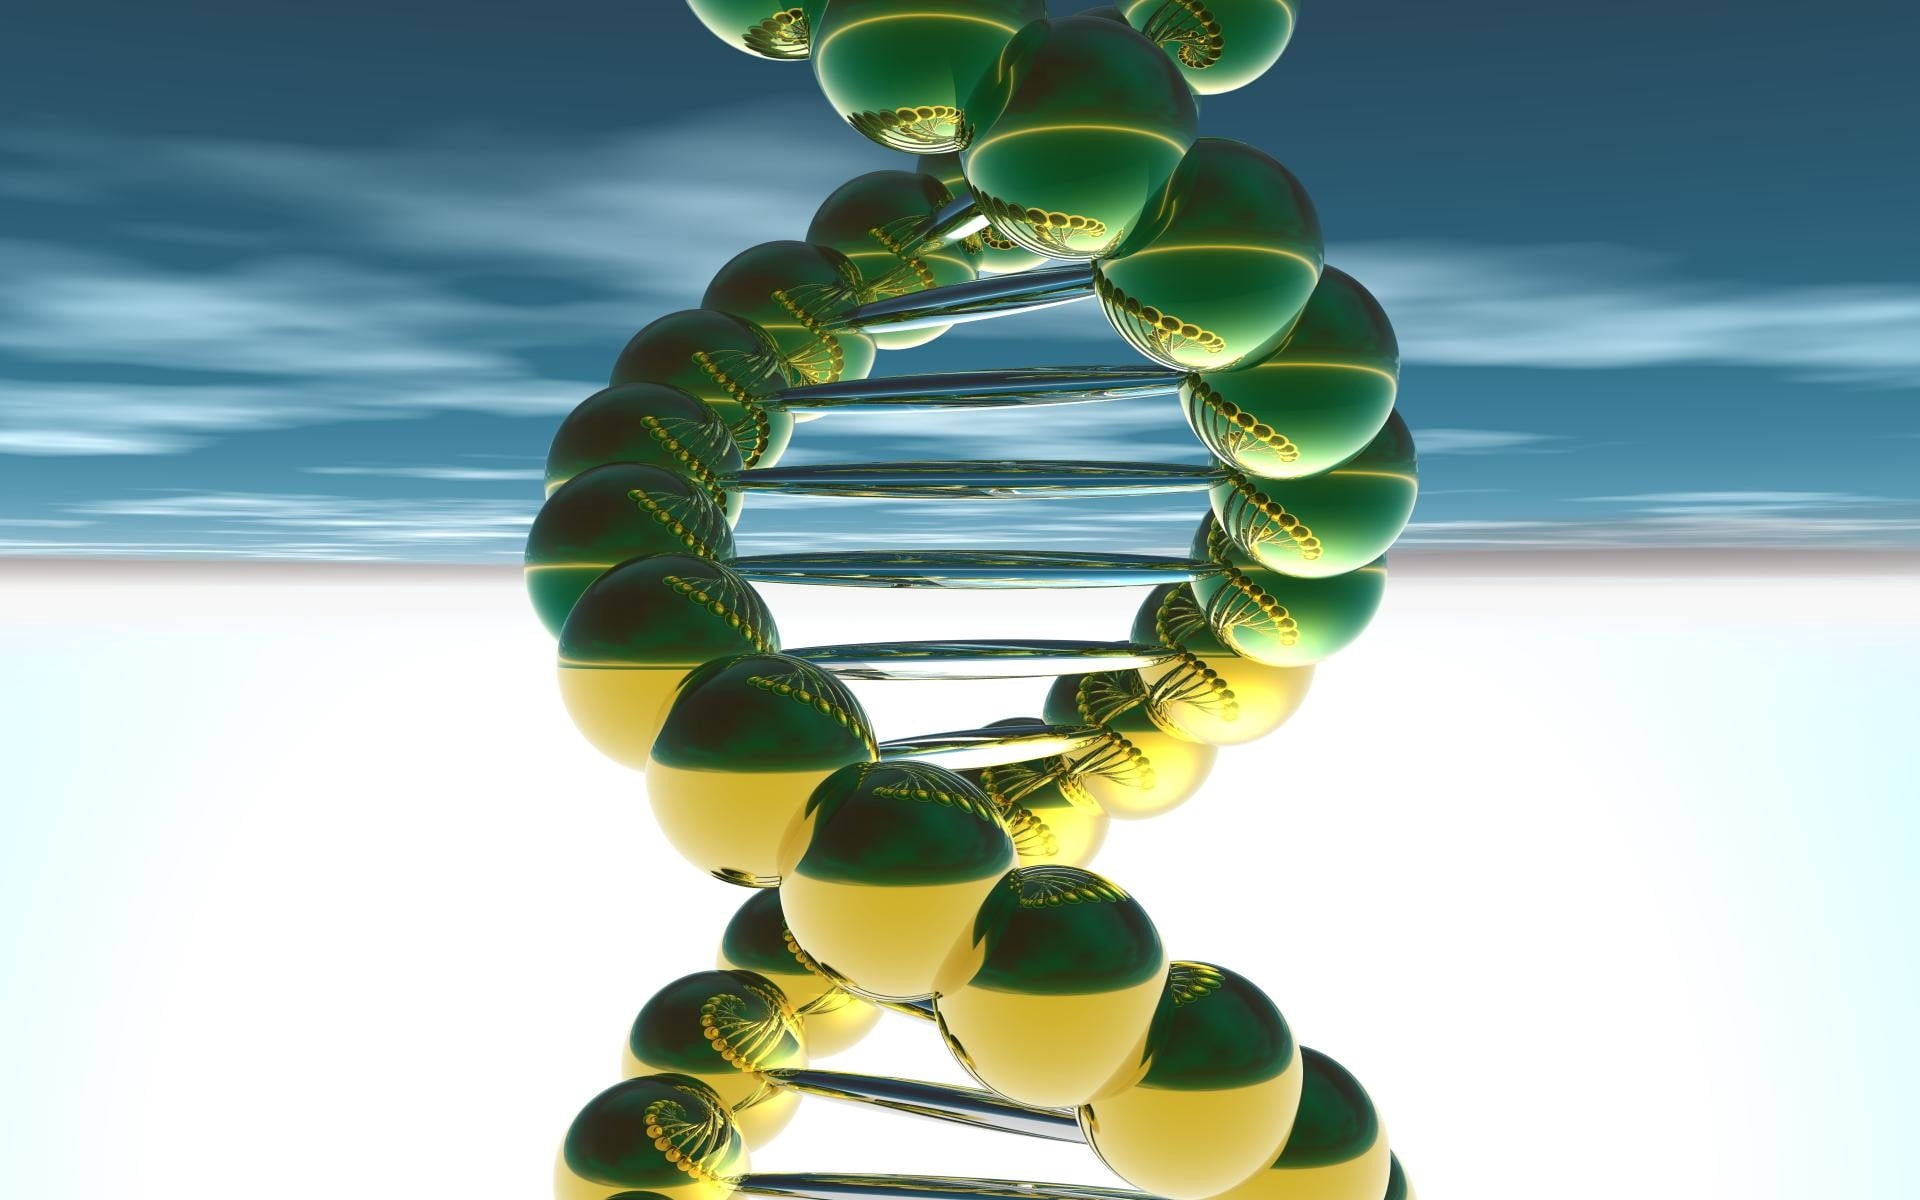 molecular module, cell, connections, balls, string, spiral, chromosome